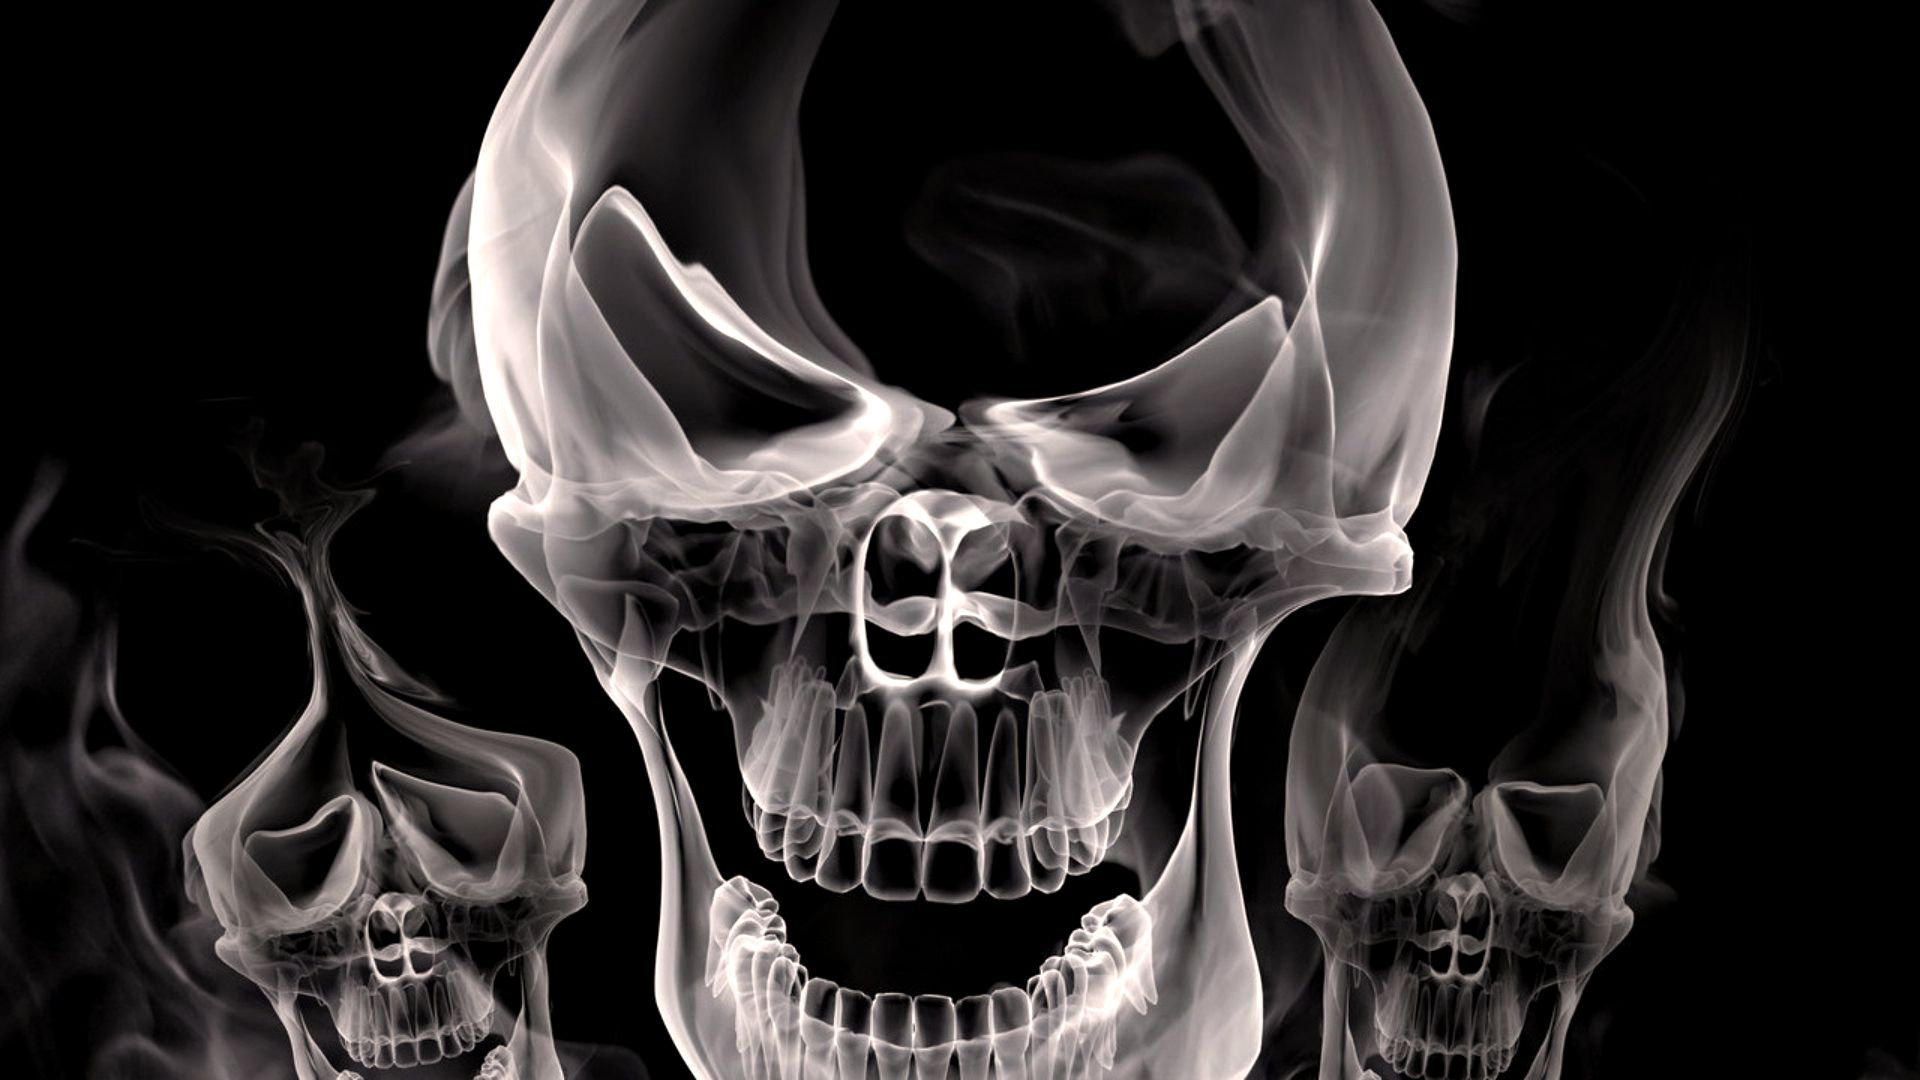 Cool 3D Skull Smoke Wallpaper HD - 1523272